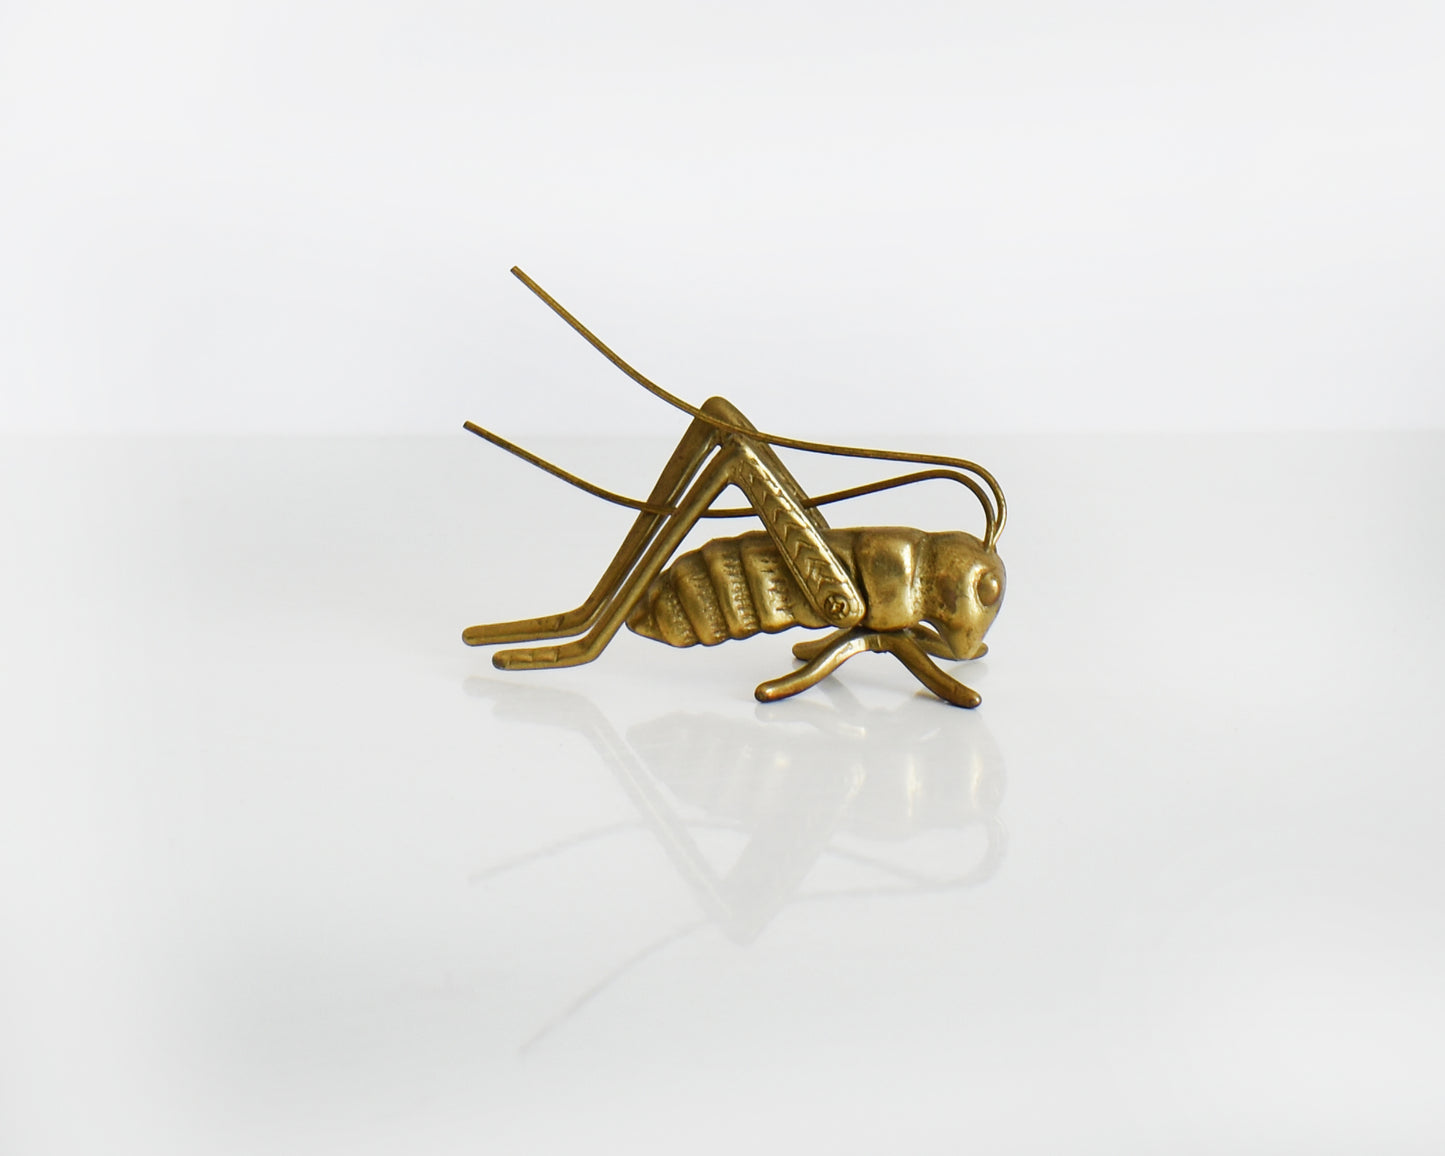 A vintage brass grasshopper/cricket on a white table.